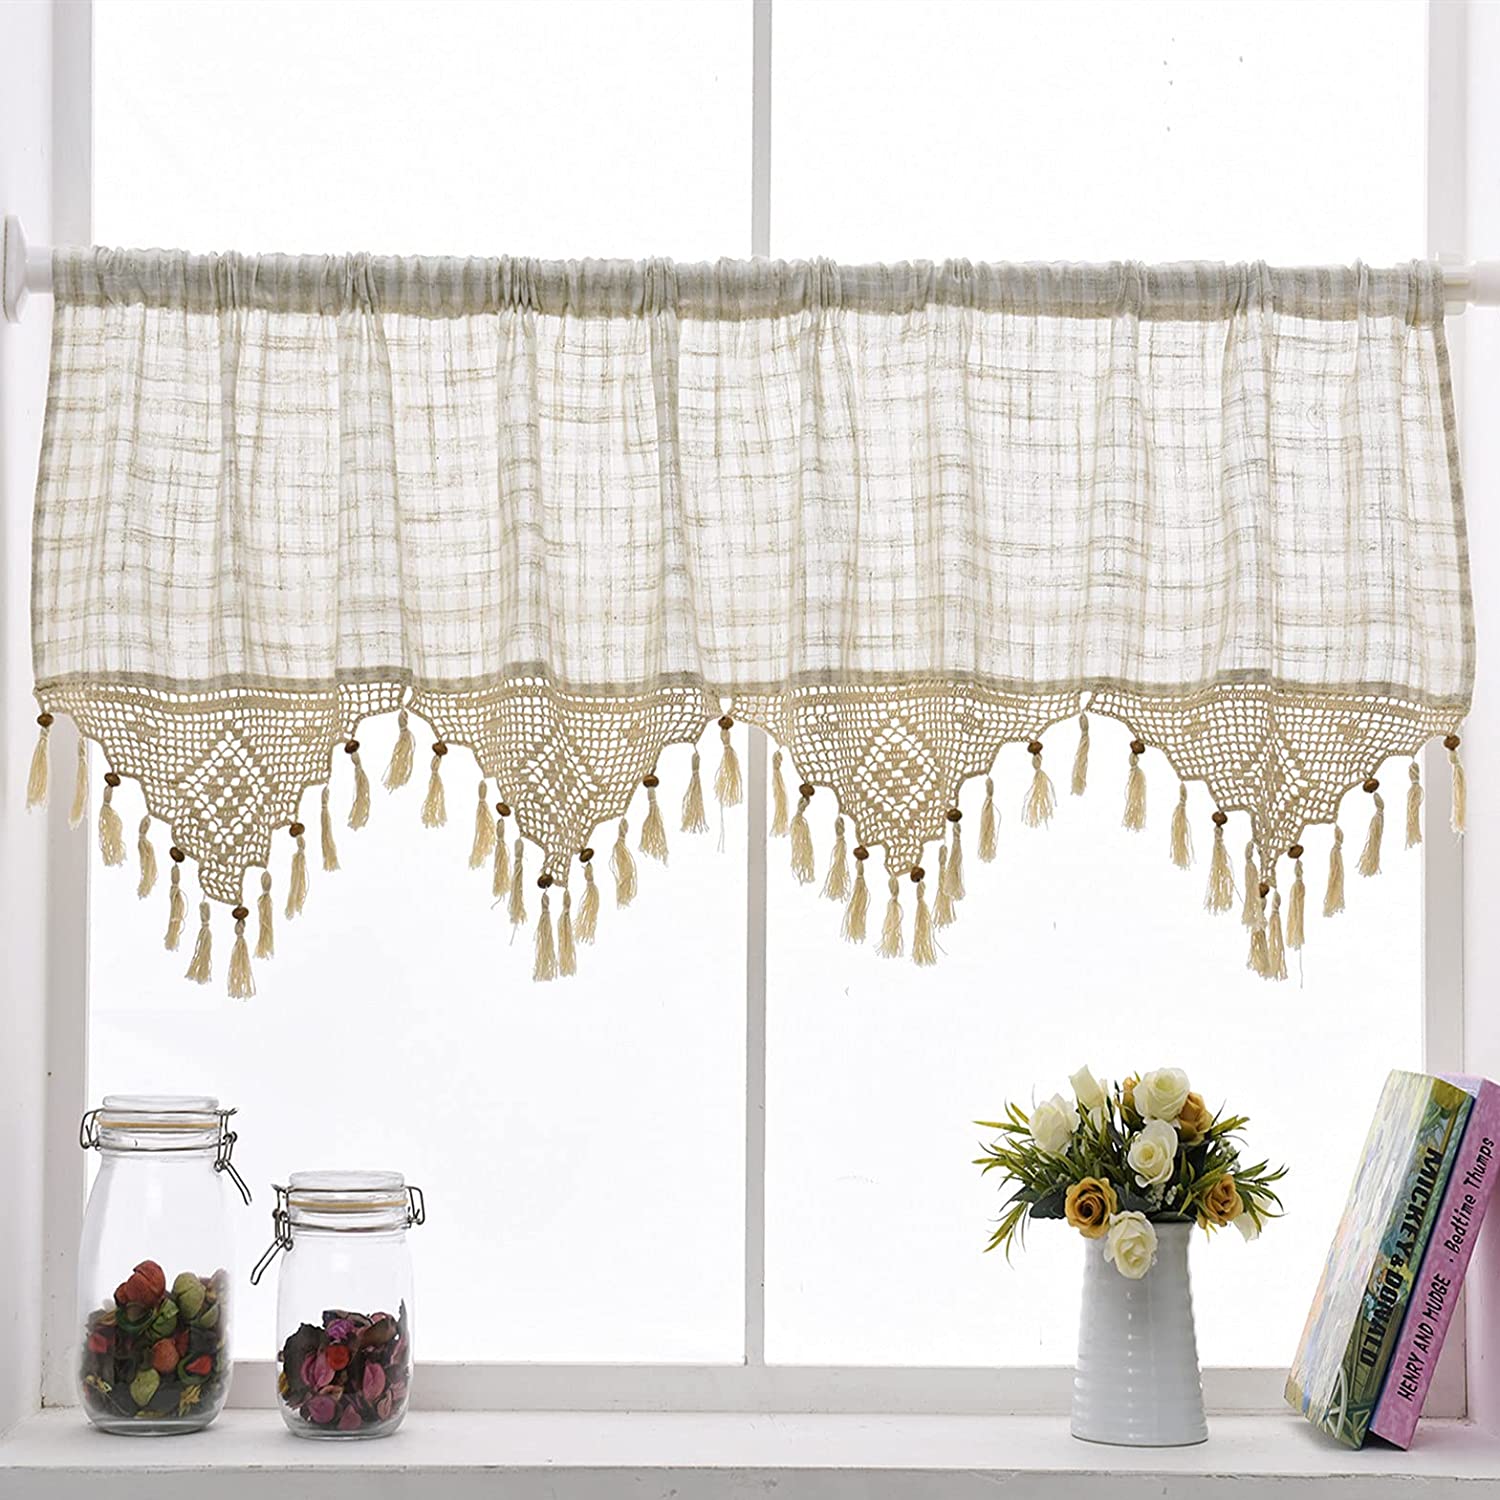 ZHH Retro Lattice Window Valance Handmade Crochet with Tassel Cafe Curtain for Window Bedroom Livingroom Dorm Decor, Beige (H 15 inch W 60 inch)